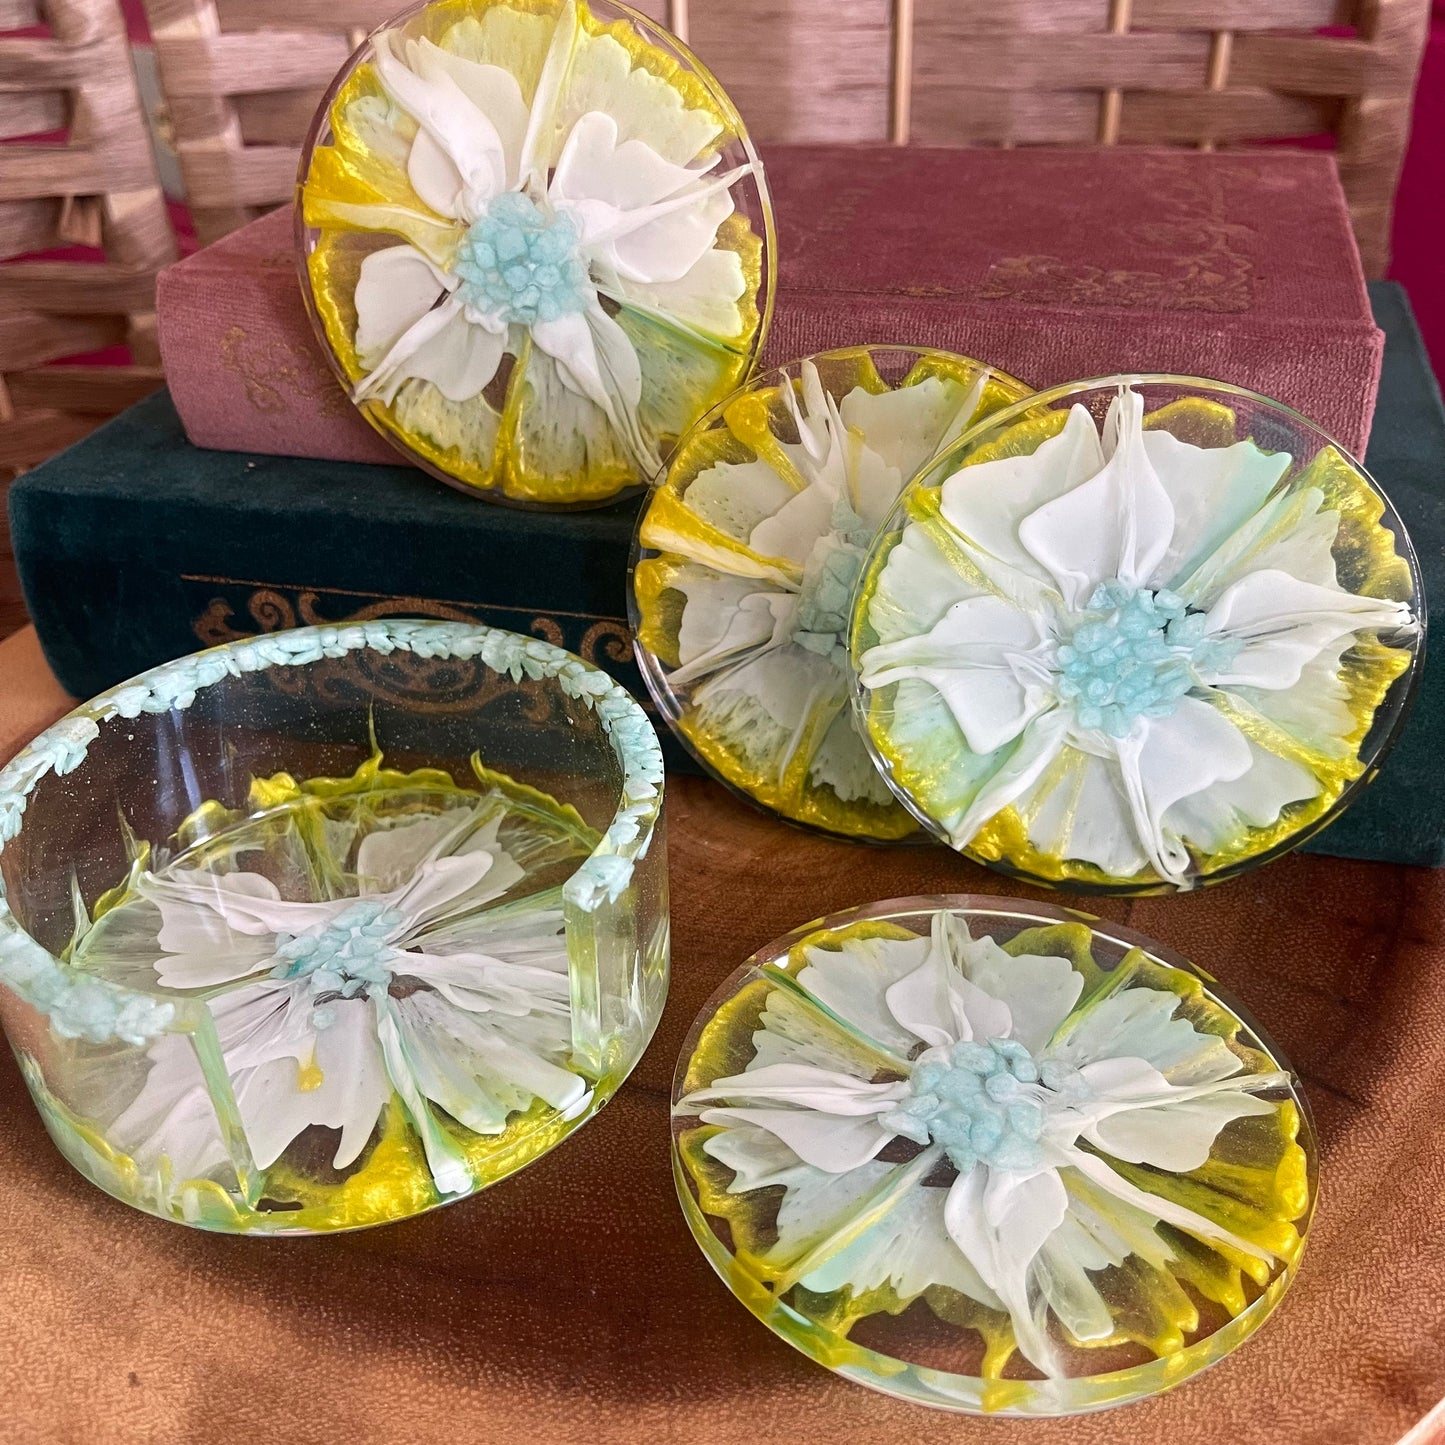 Resin Coaster Class - 3D flower (all resin) 12/19 @ 6PM